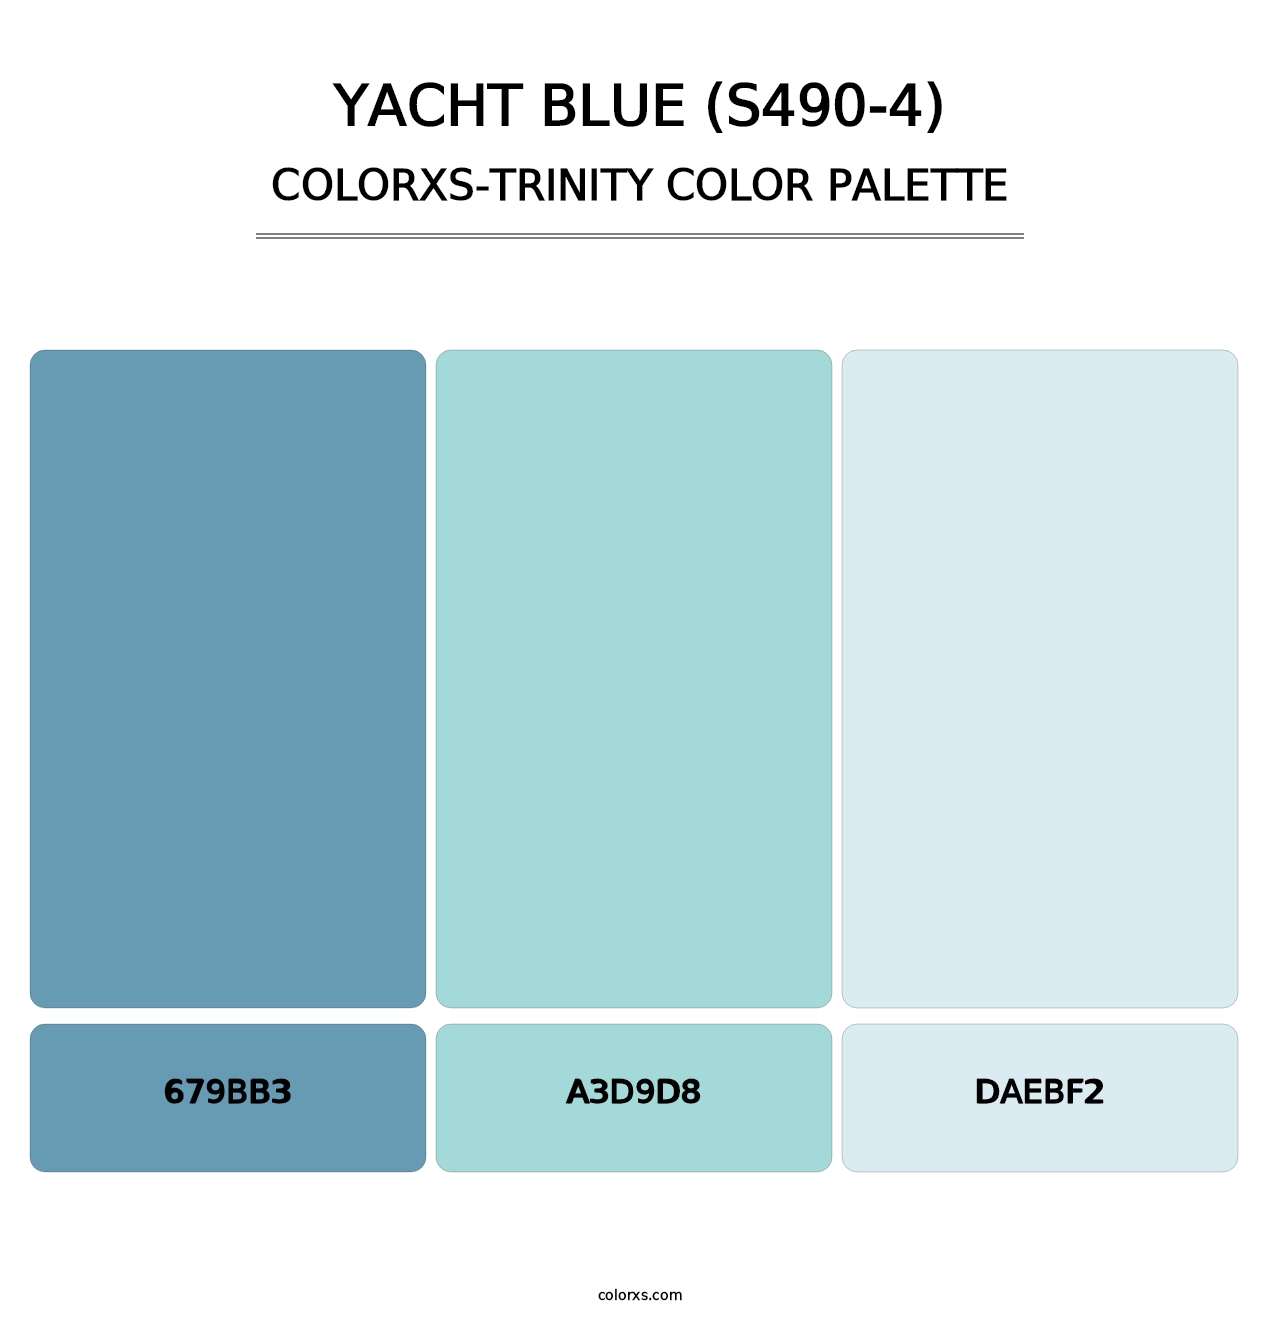 Yacht Blue (S490-4) - Colorxs Trinity Palette